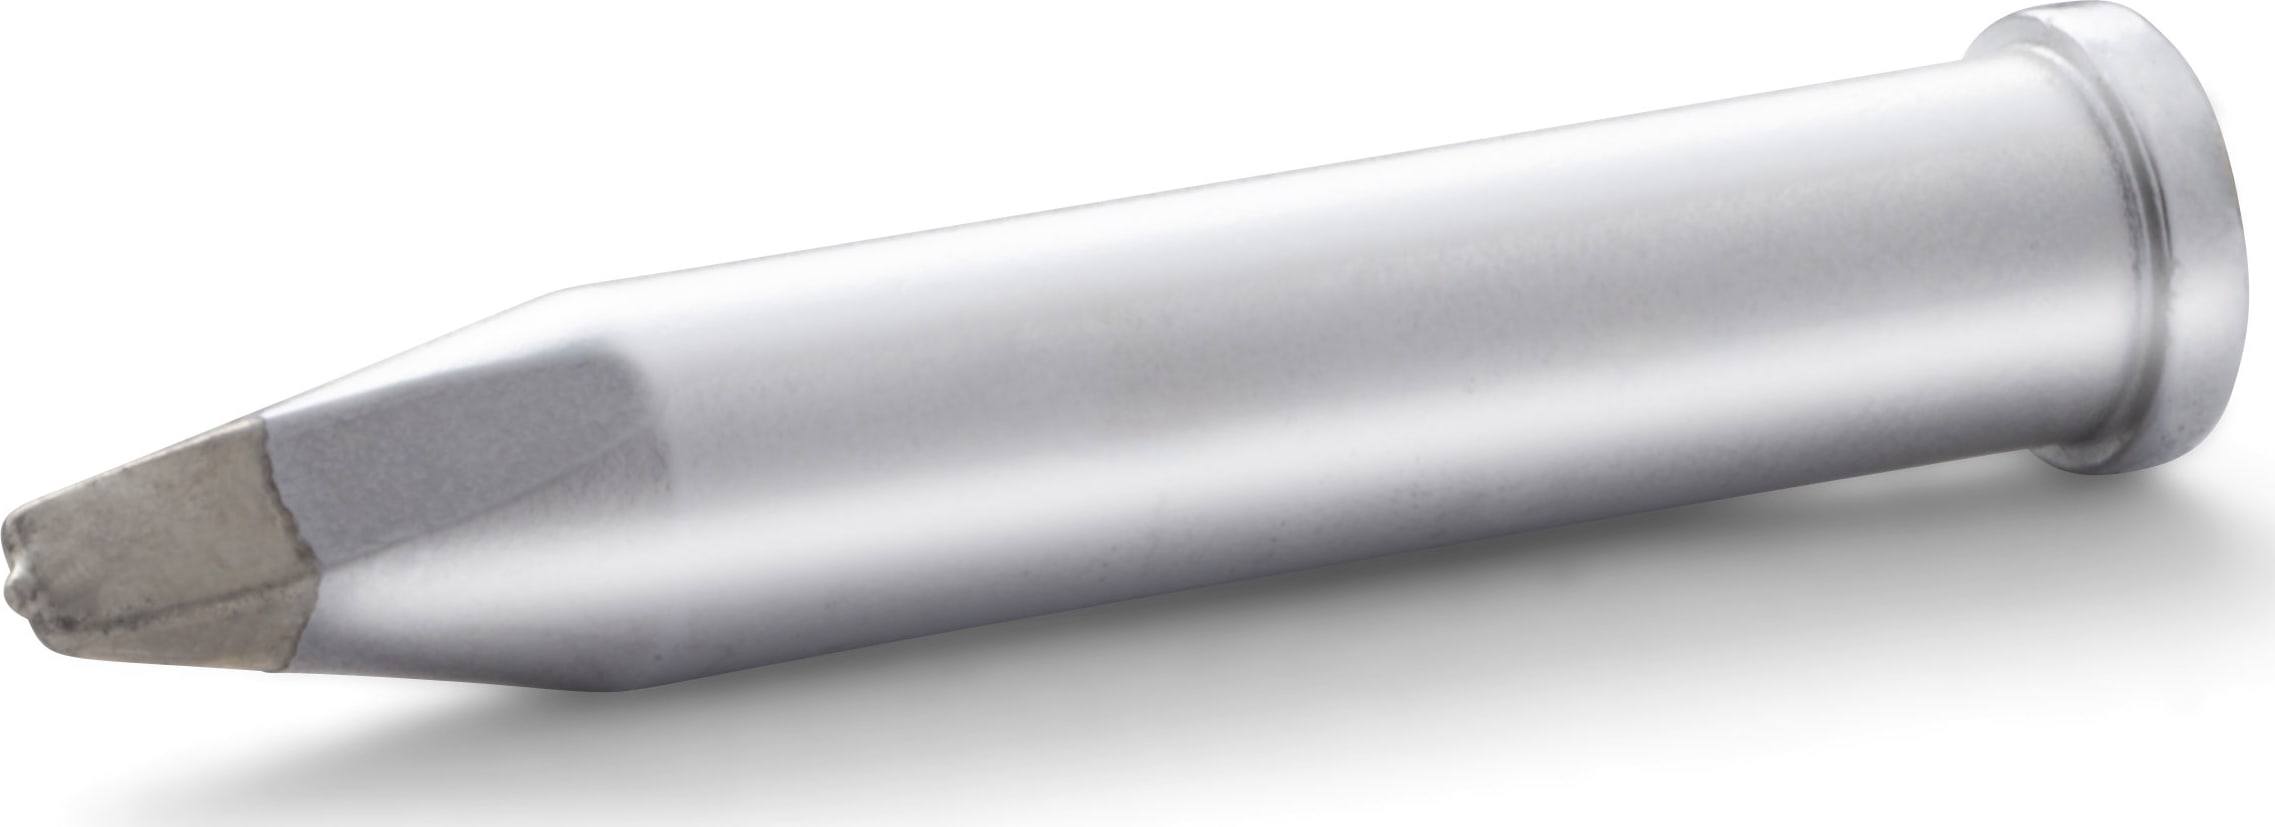 Weller XTBSL - XT Series Soldering Tip, Flat Chisel, 2.4mm x 0.45mm